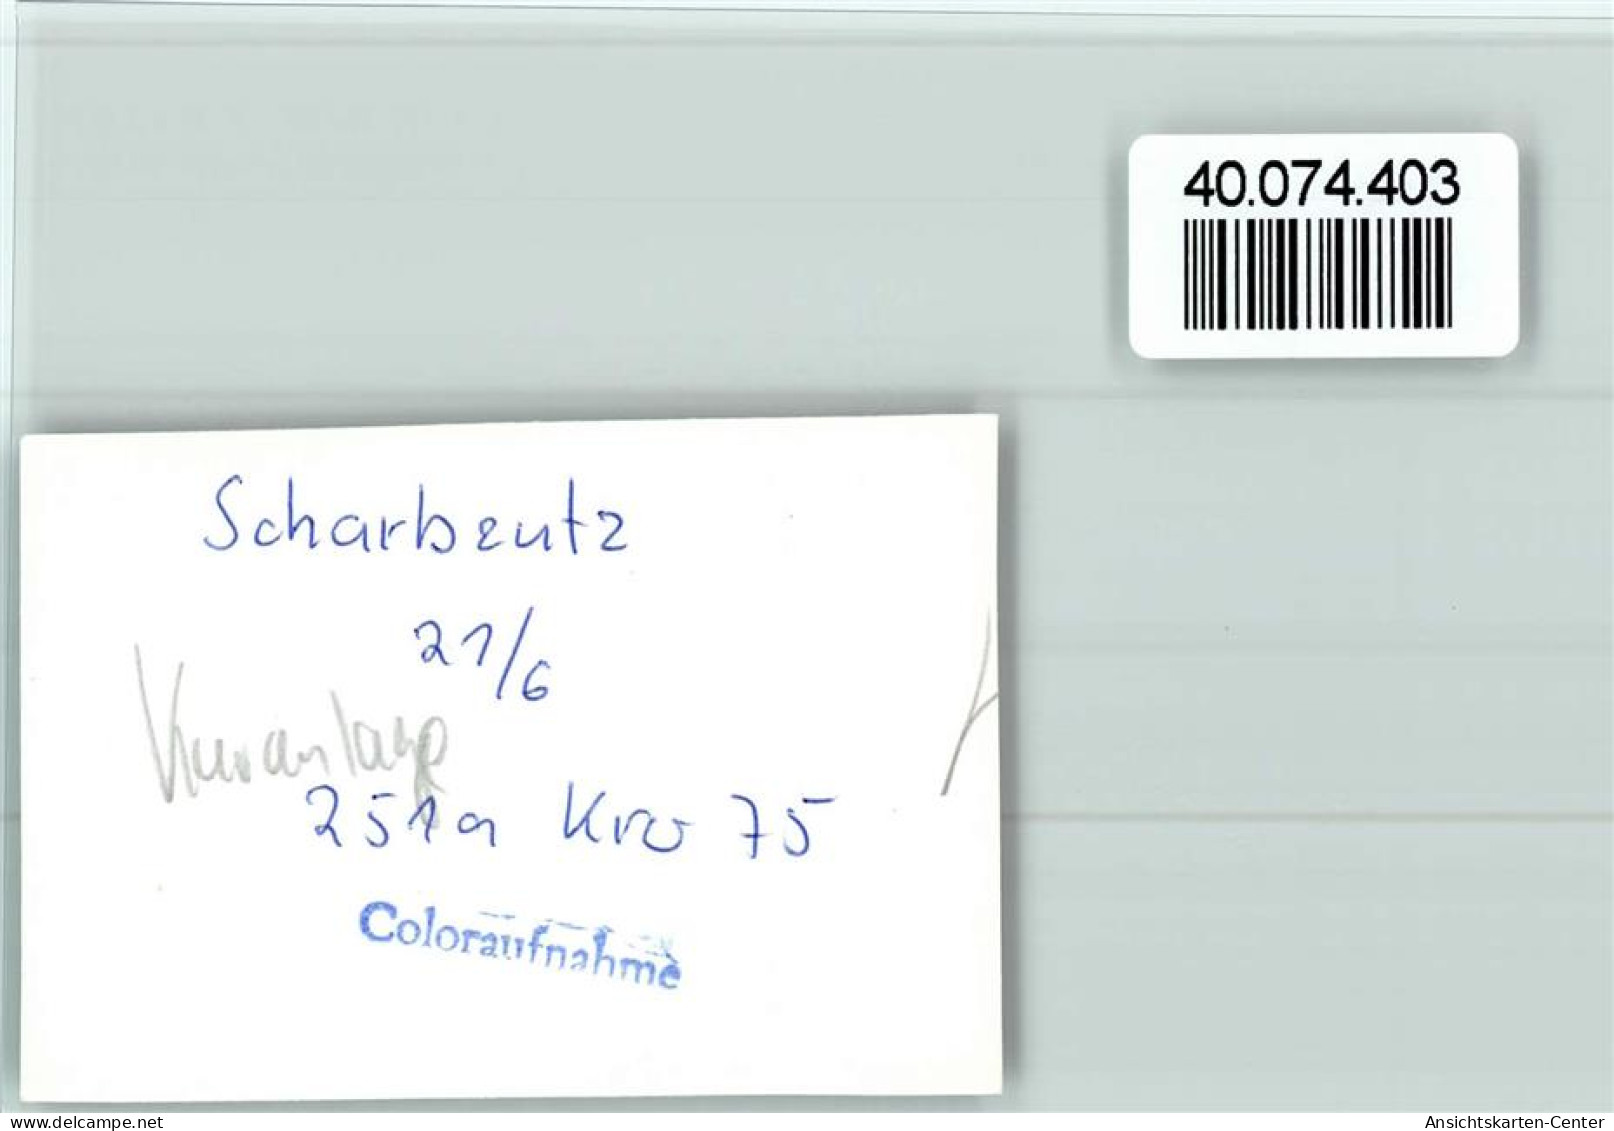 40074403 - Scharbeutz - Scharbeutz